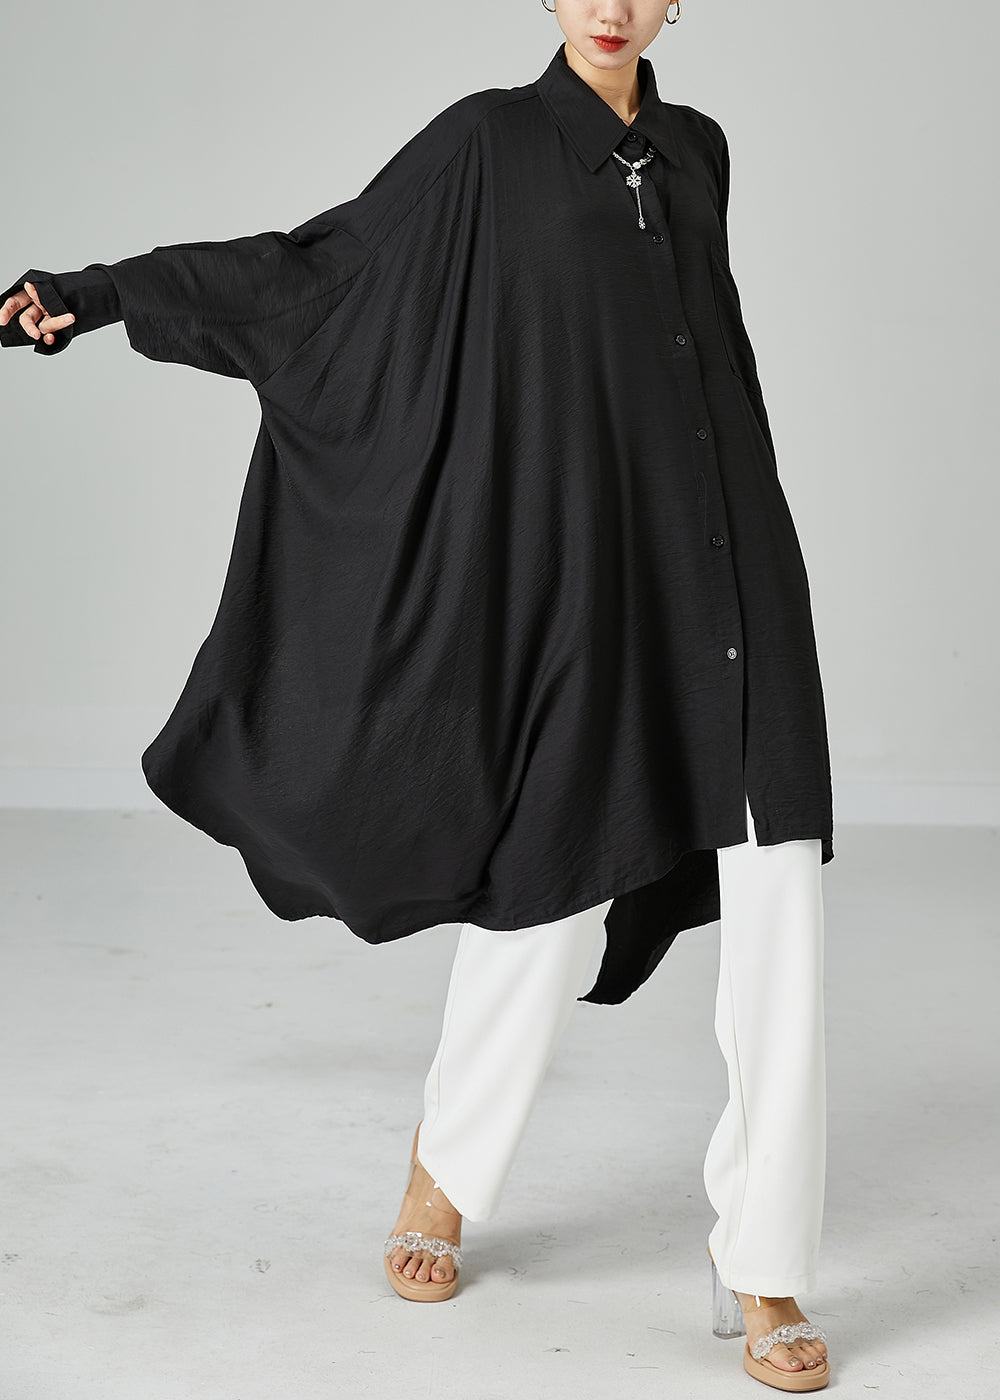 Style Black Asymmetrical Design Oversized Cotton A Line Dresses Summer LY6130 - fabuloryshop